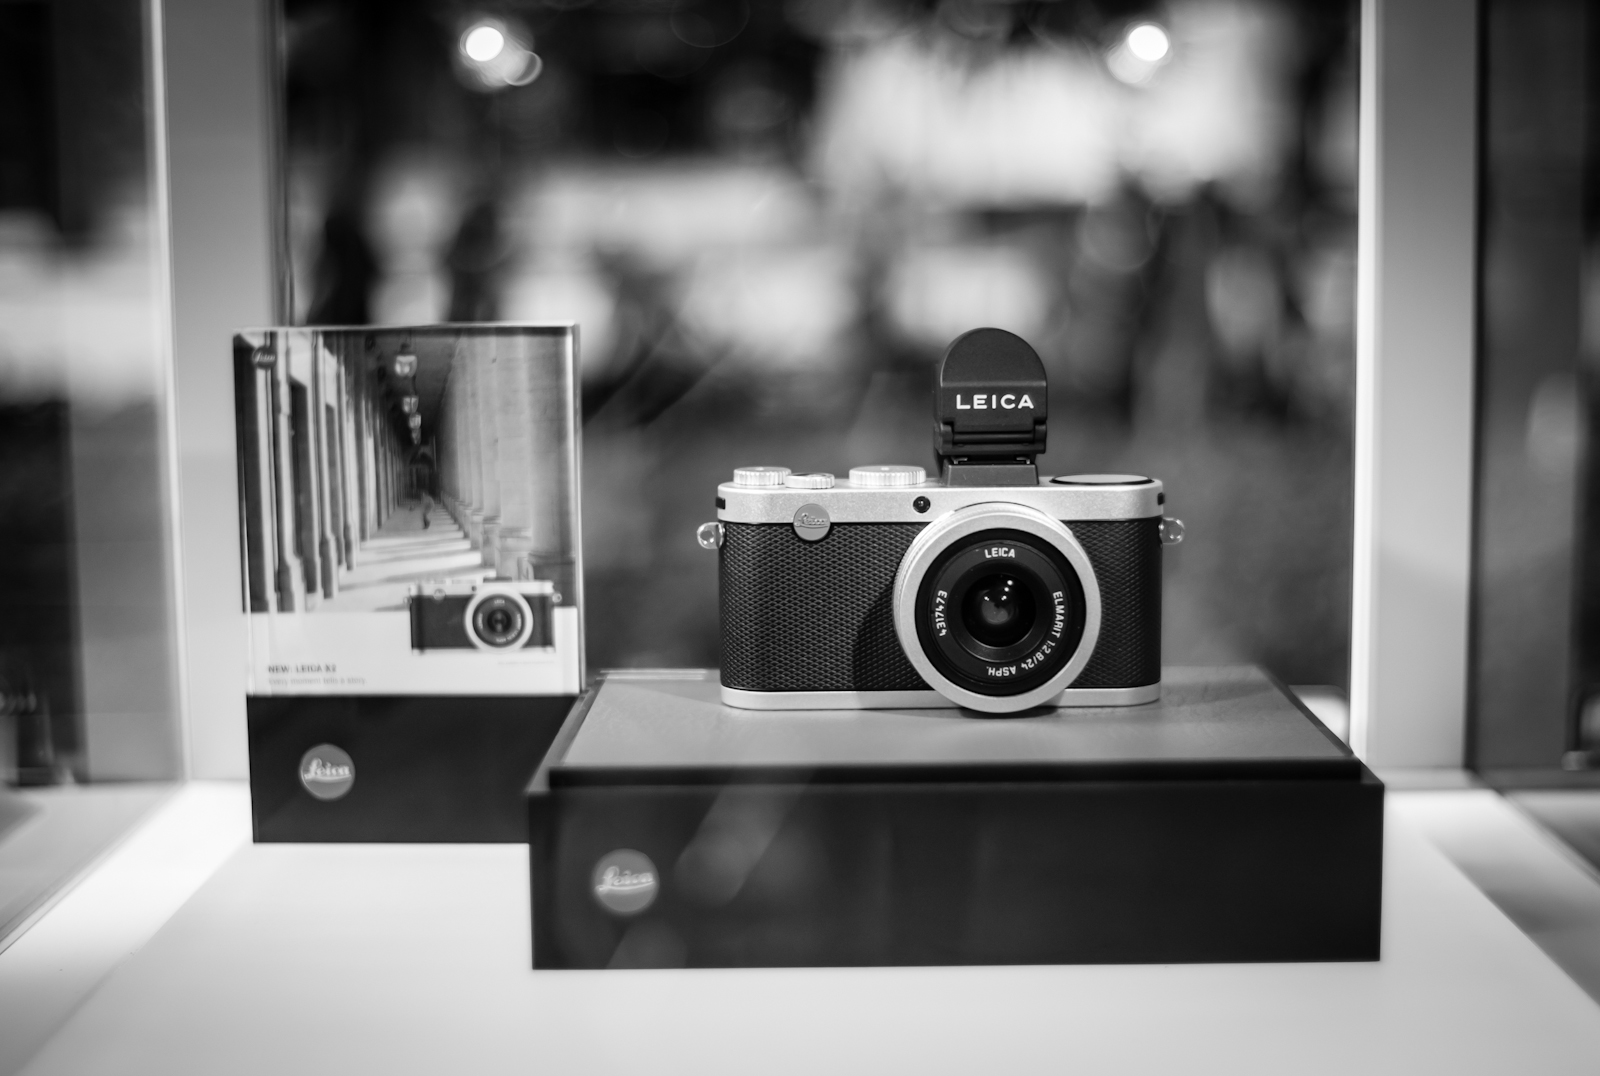 Street photography - Leica X2 on display